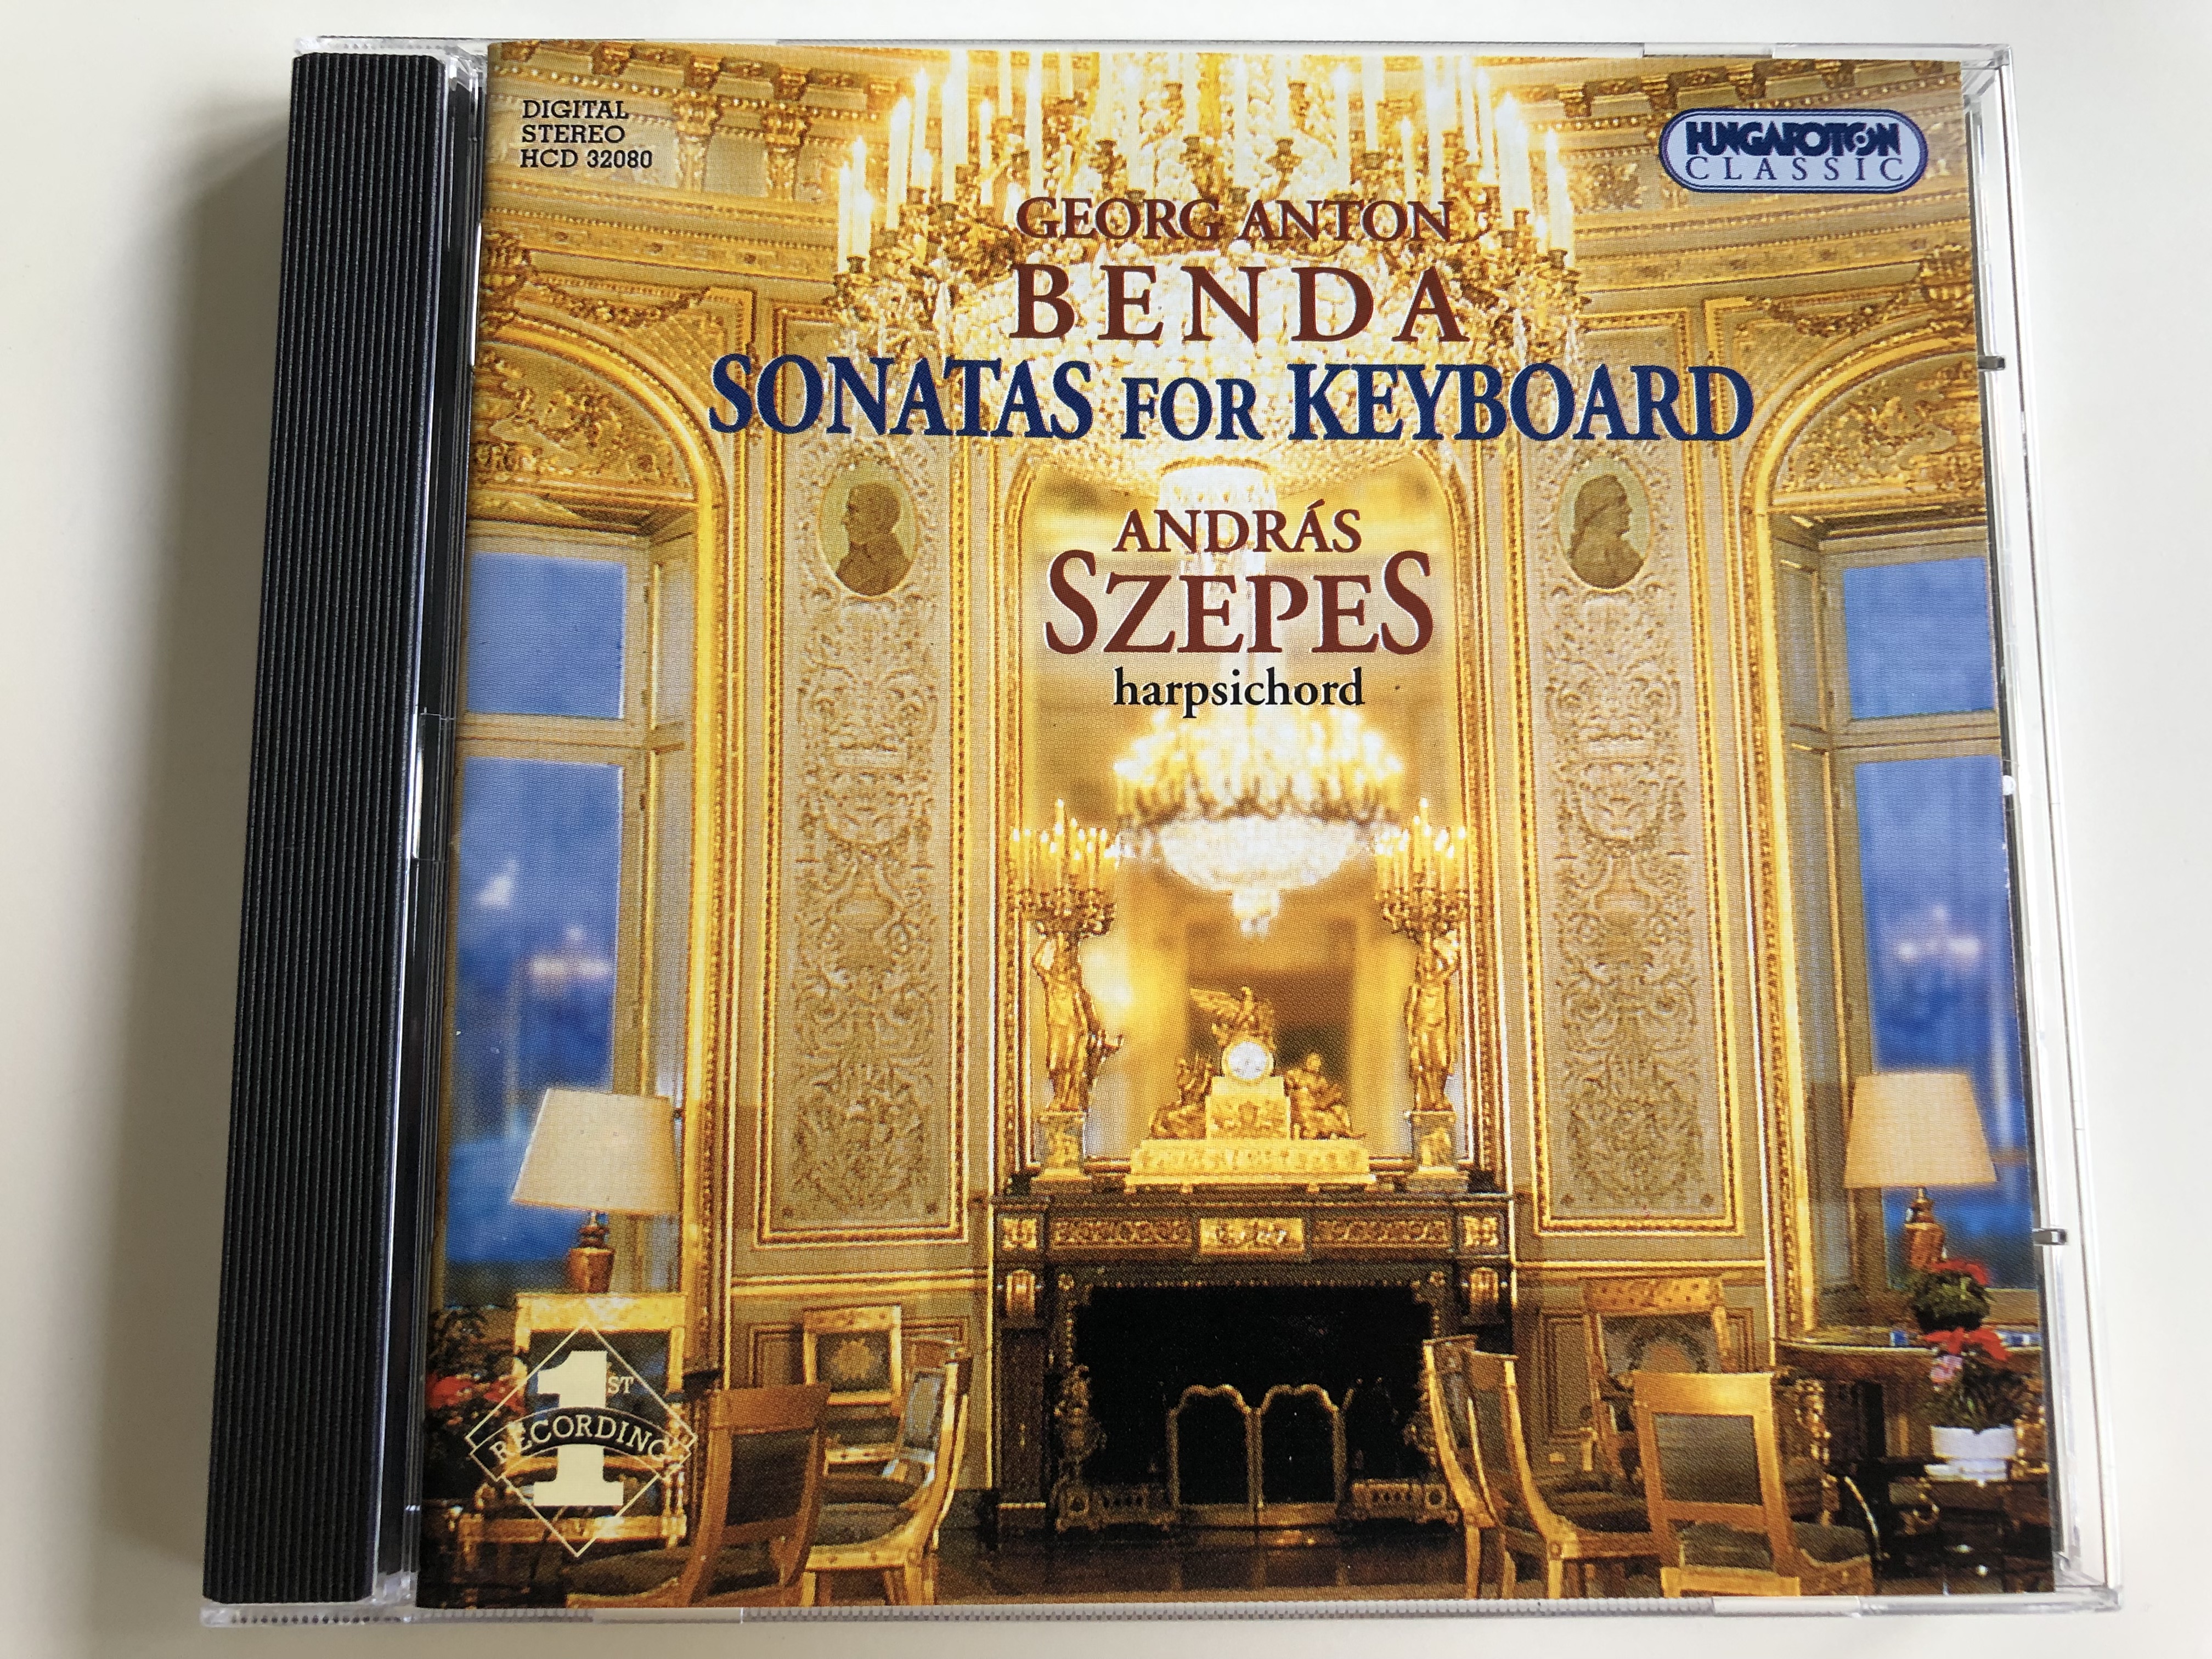 georg-anton-benda-sonatas-for-keyboard-andr-s-szepes-harpsichord-hungaroton-classic-hcd-32080-audio-cd-2002-1-.jpg